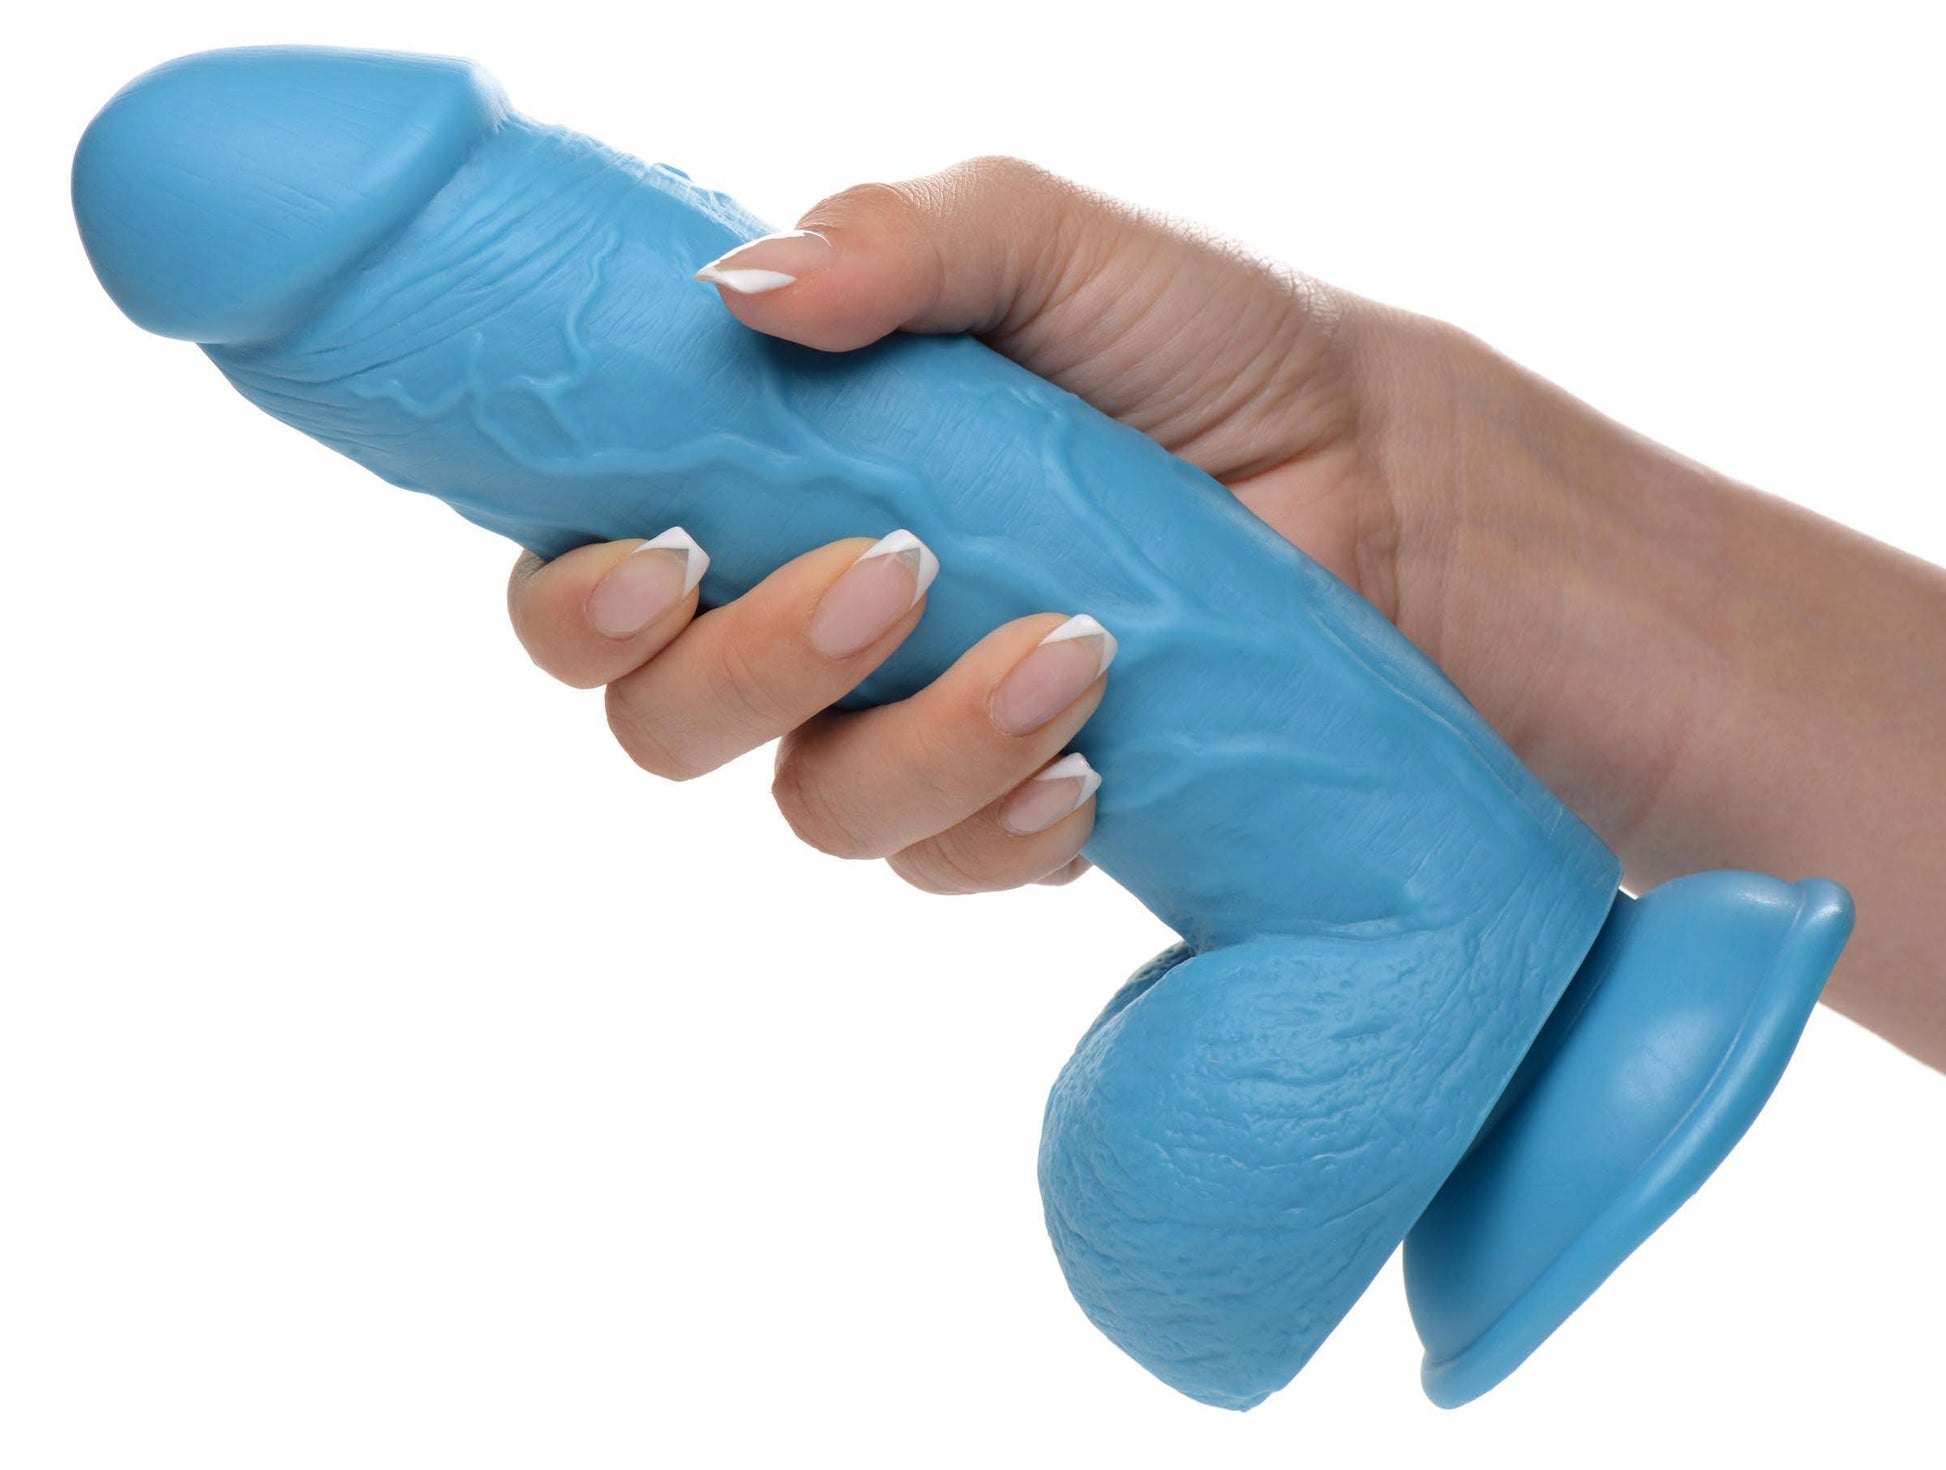 Pop Pecker 8.25 Inch Dildo With Balls - Blue - My Sex Toy Hub